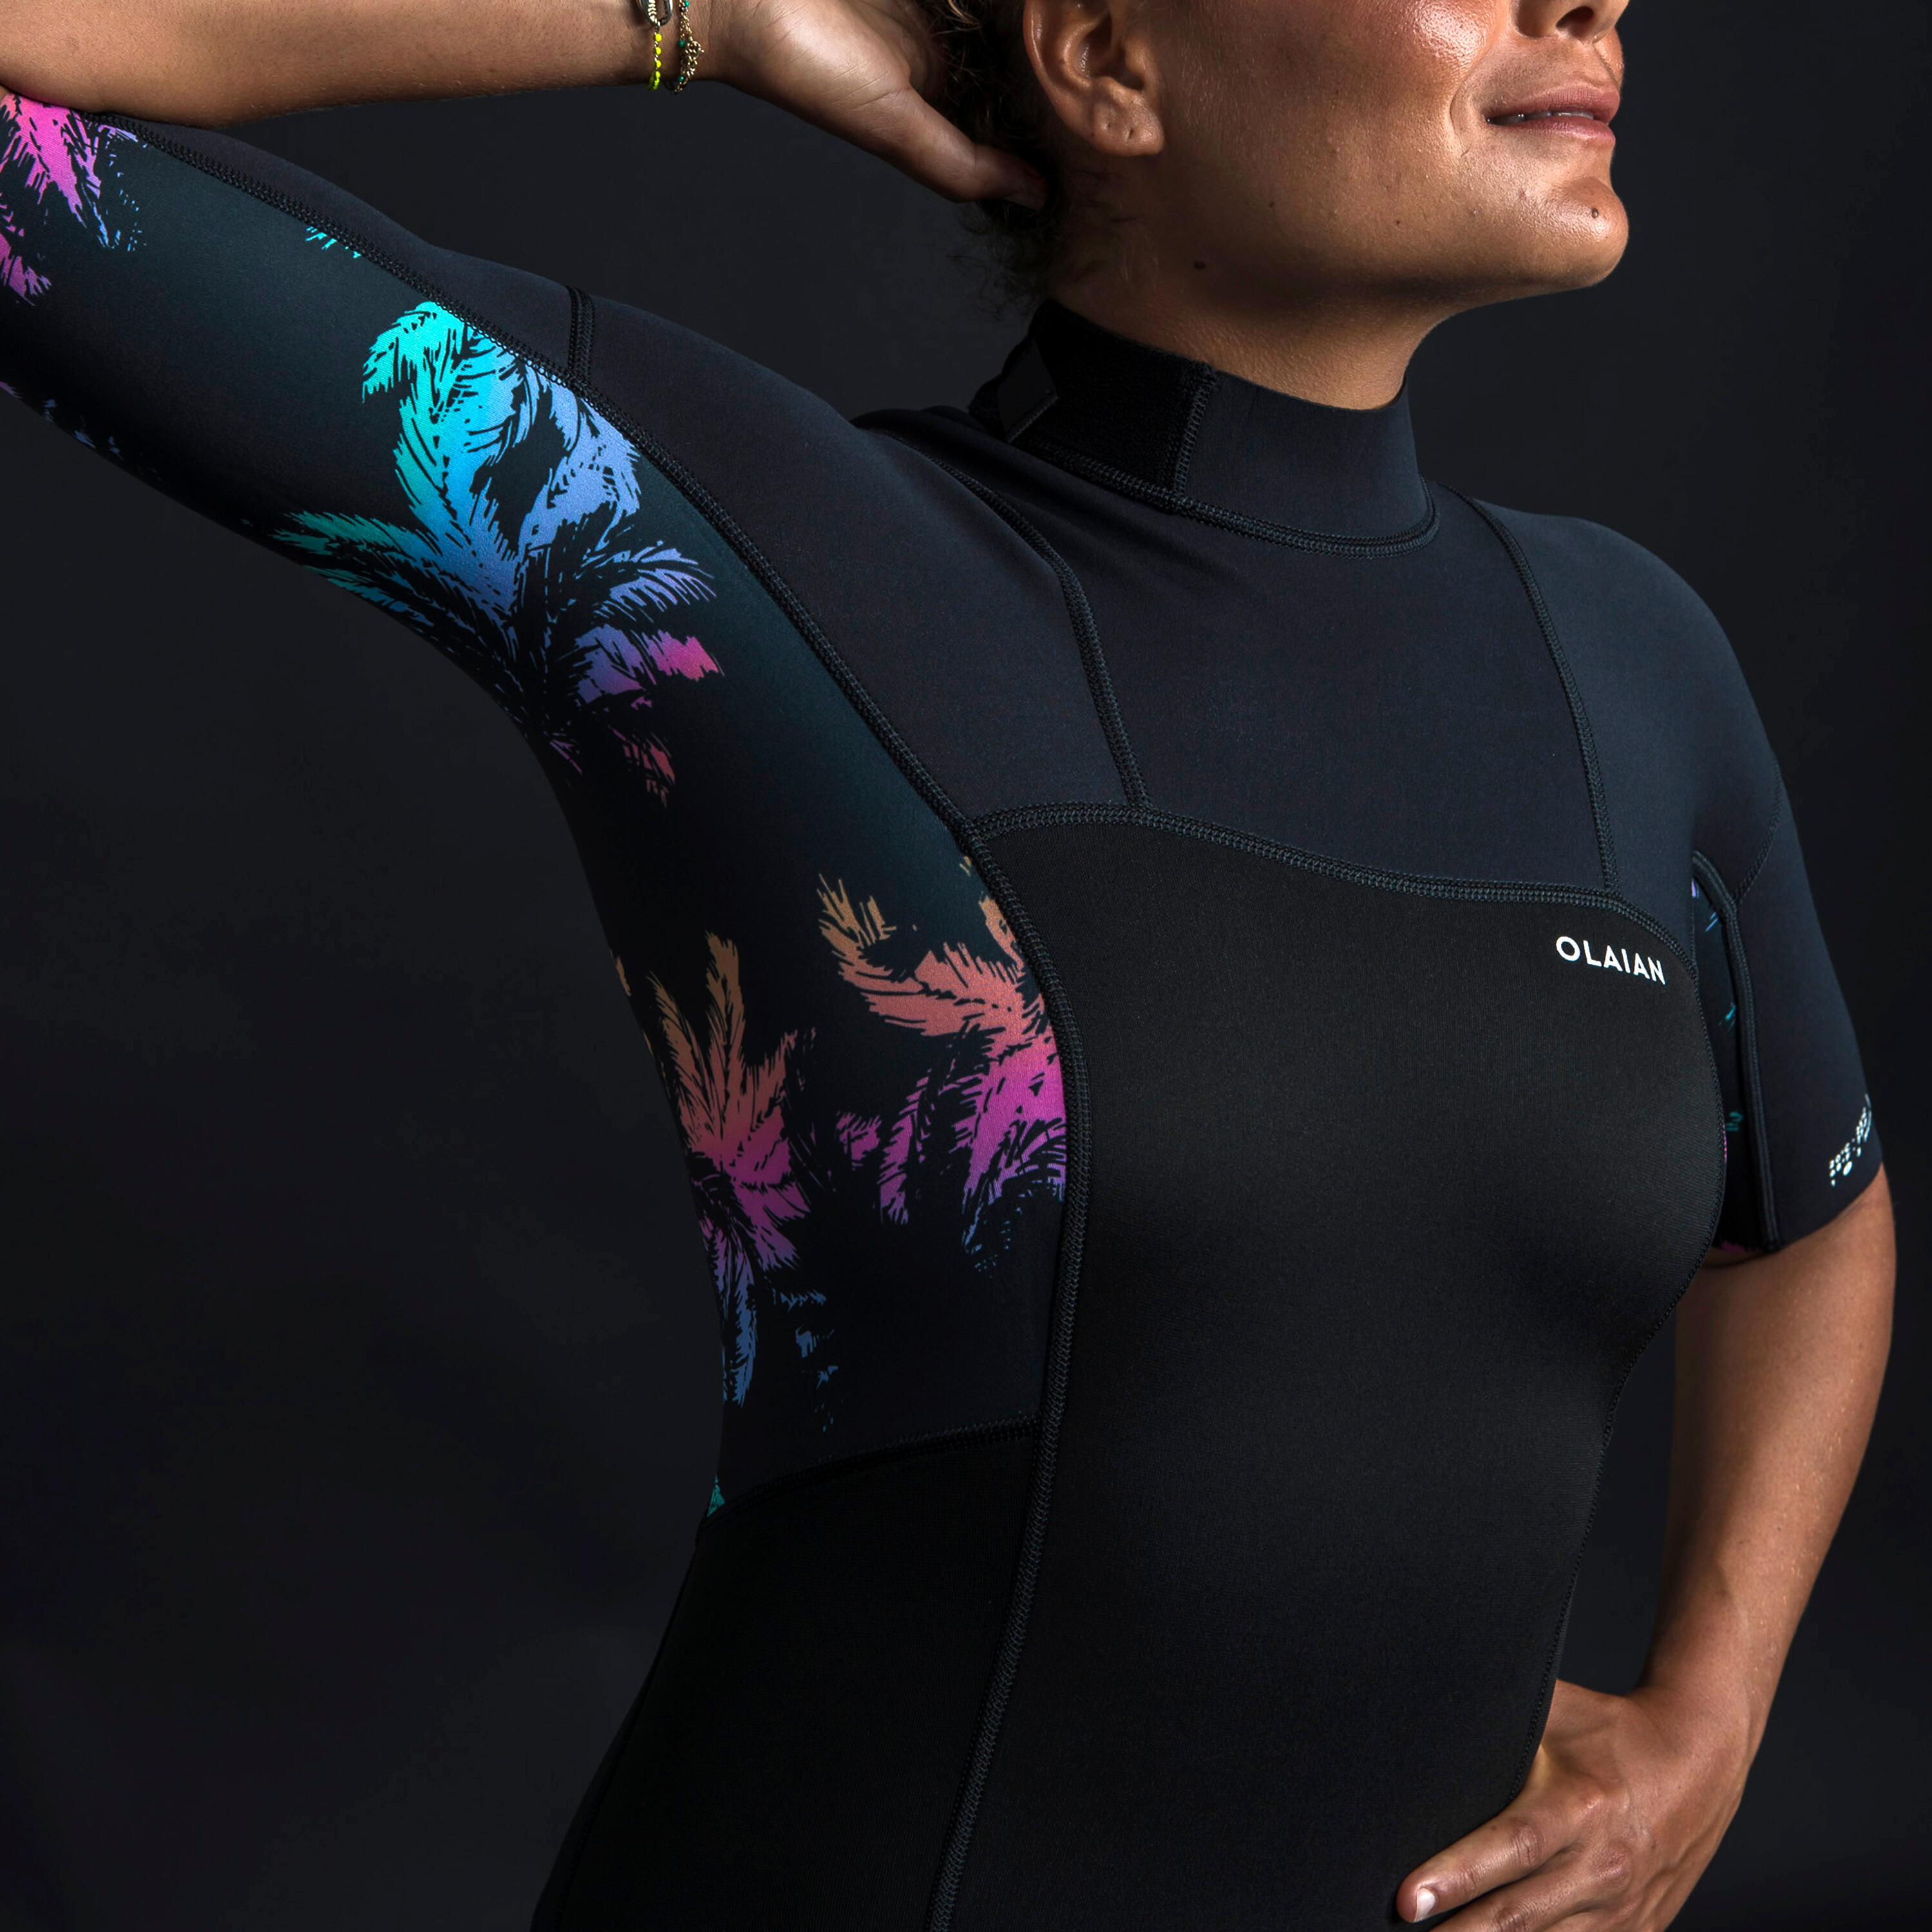 Women's surfing shorty short-sleeved with back zip 500 PALMDARK 6/10